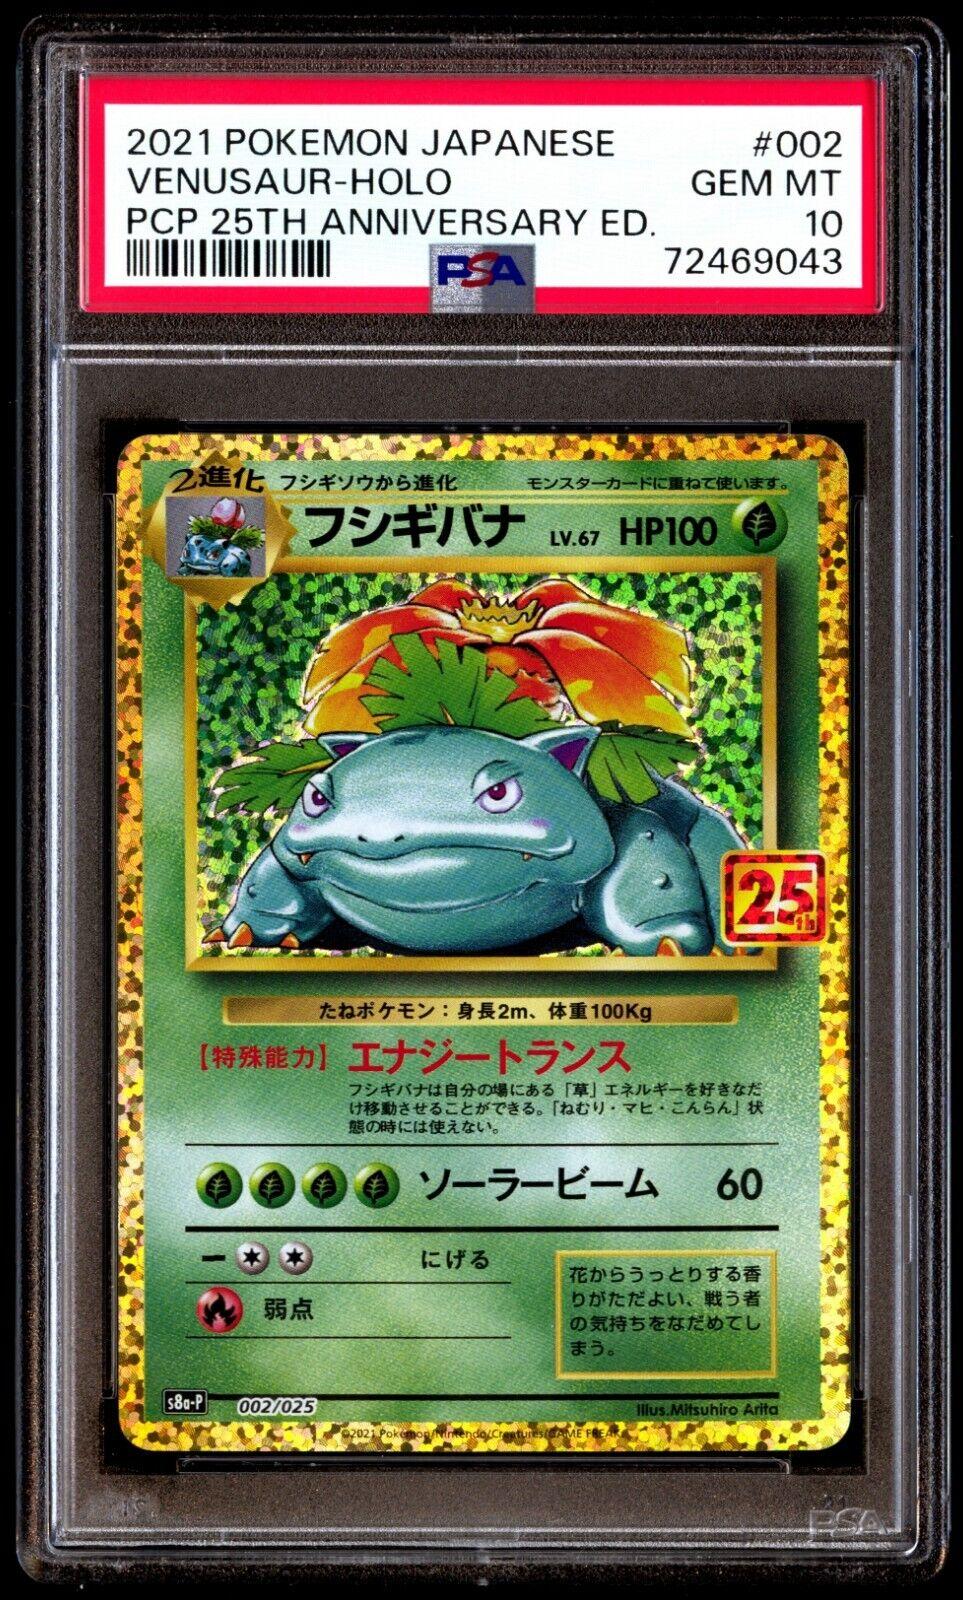 PSA GEM MT 10 2021 Pokémon Japanese Promo Card Pack 25th